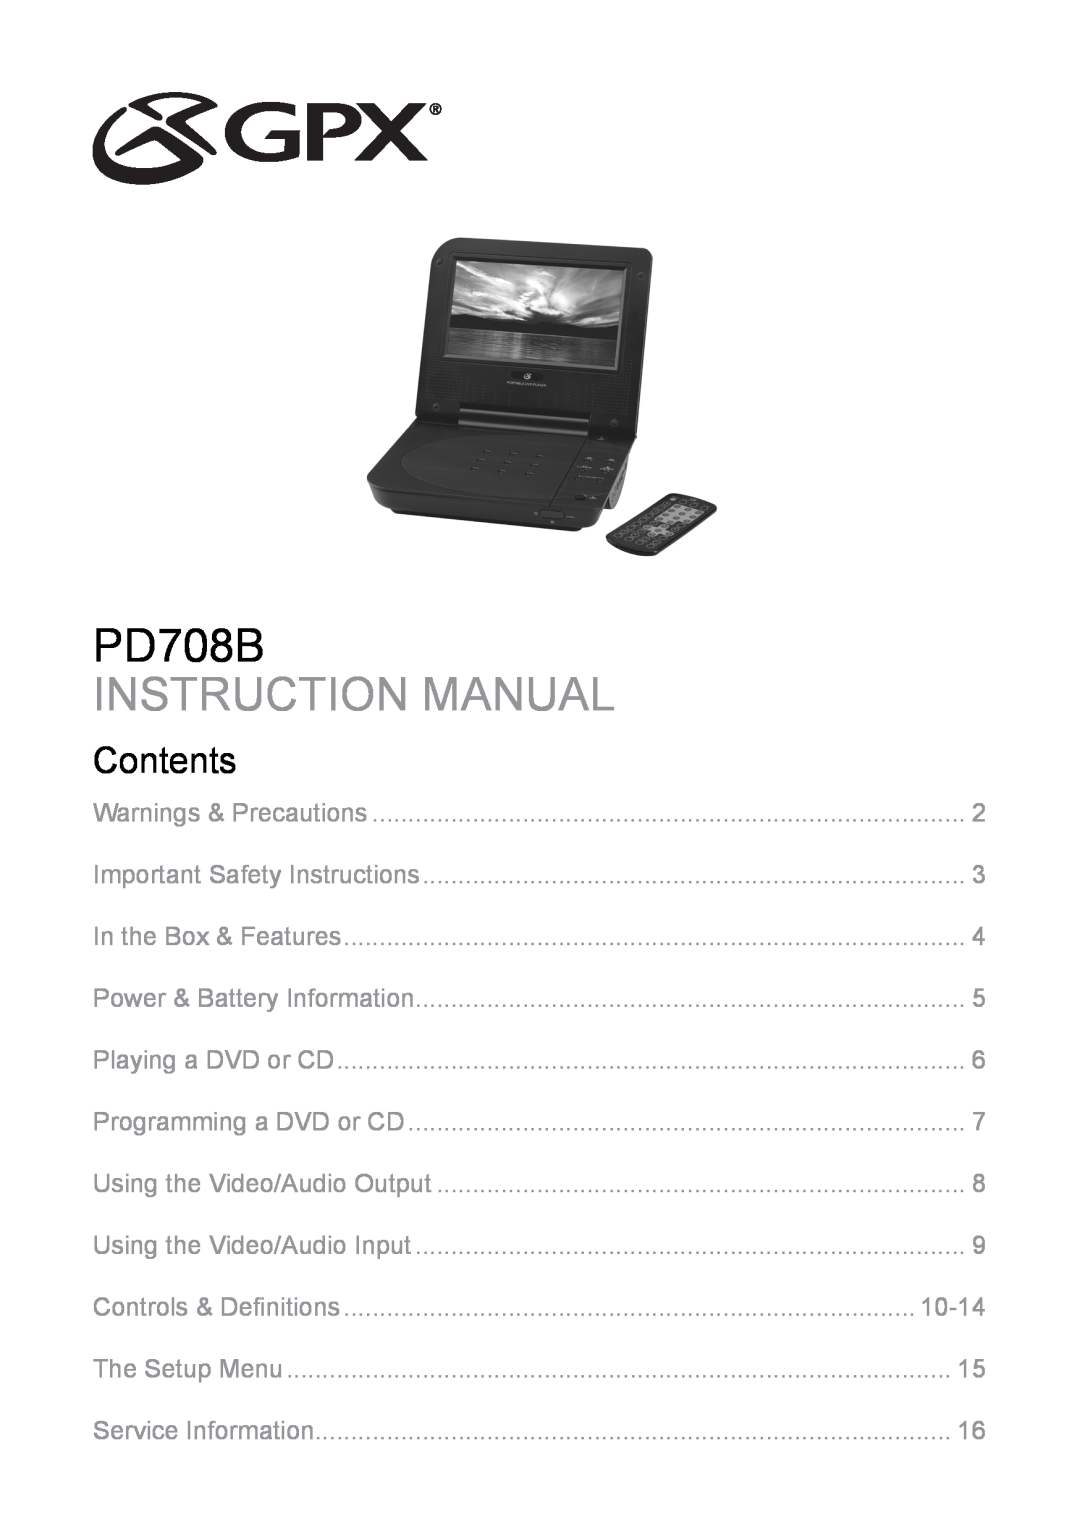 GPX PD708B manual Contenido, Manual De Instrucciones, 10-14 